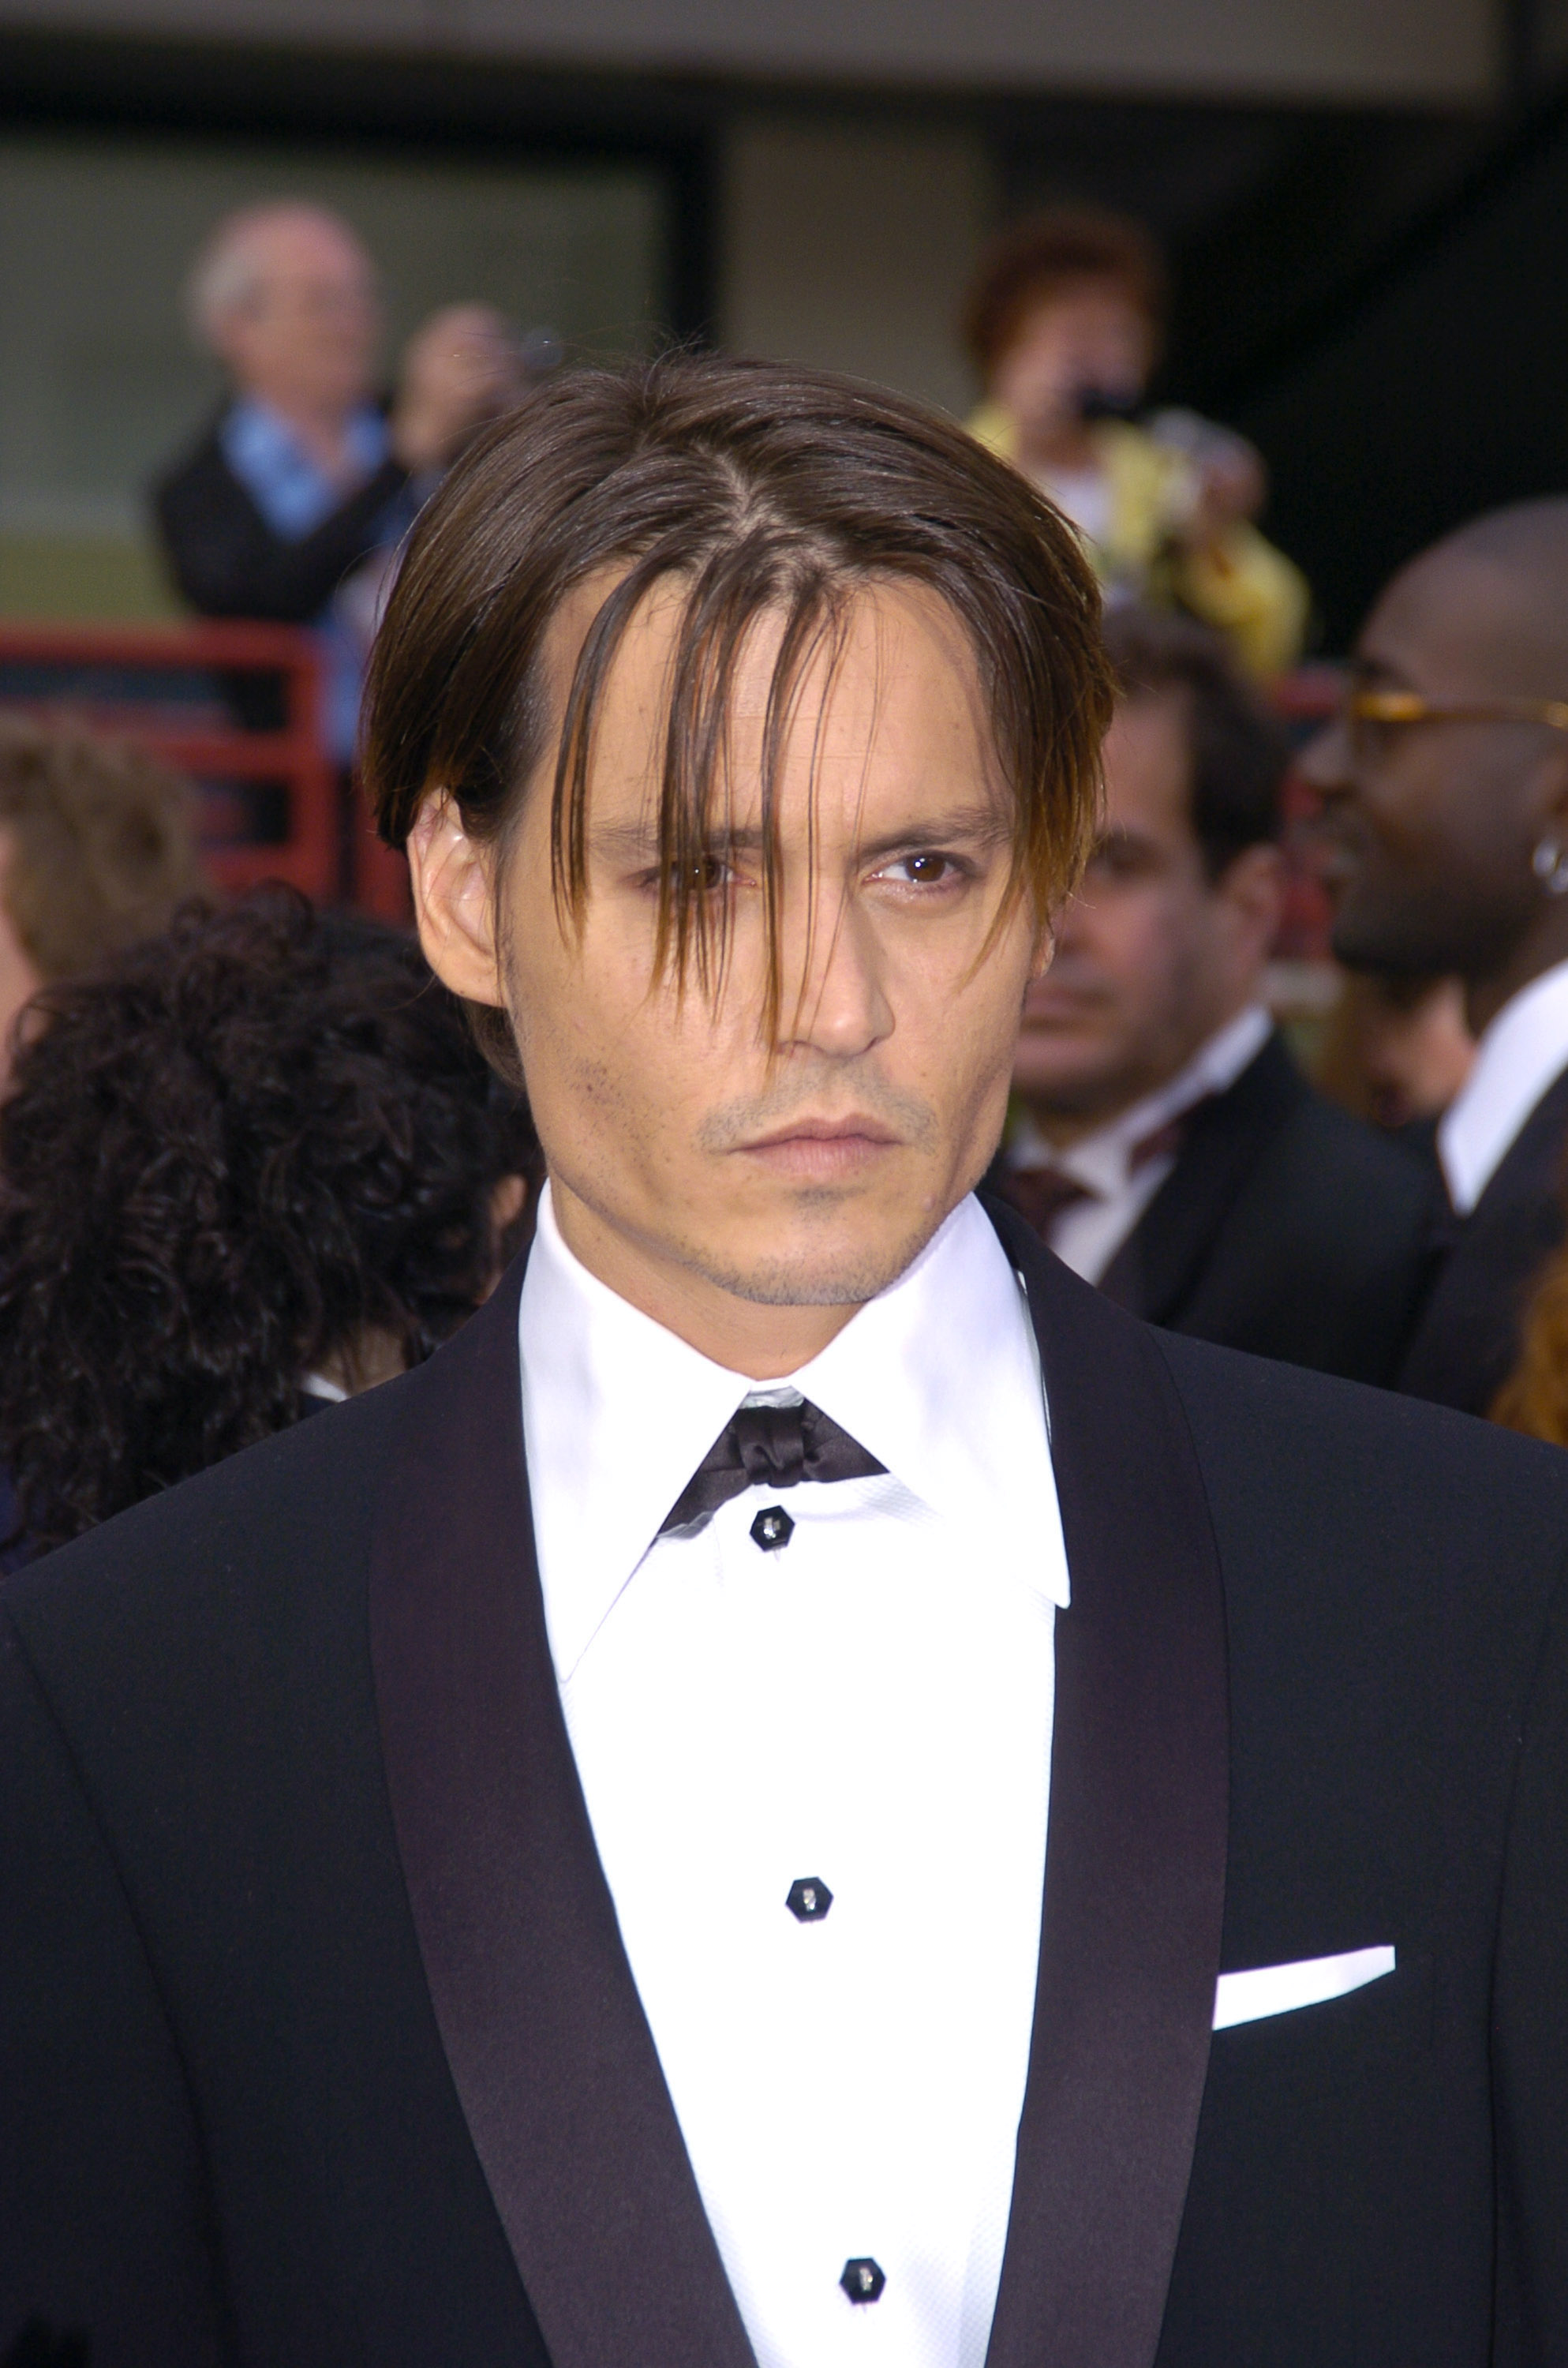 Johnny Depp bei den 76th Annual Academy Awards in Hollywood, Kalifornien am 29. Februar 2004 | Quelle: Getty Images